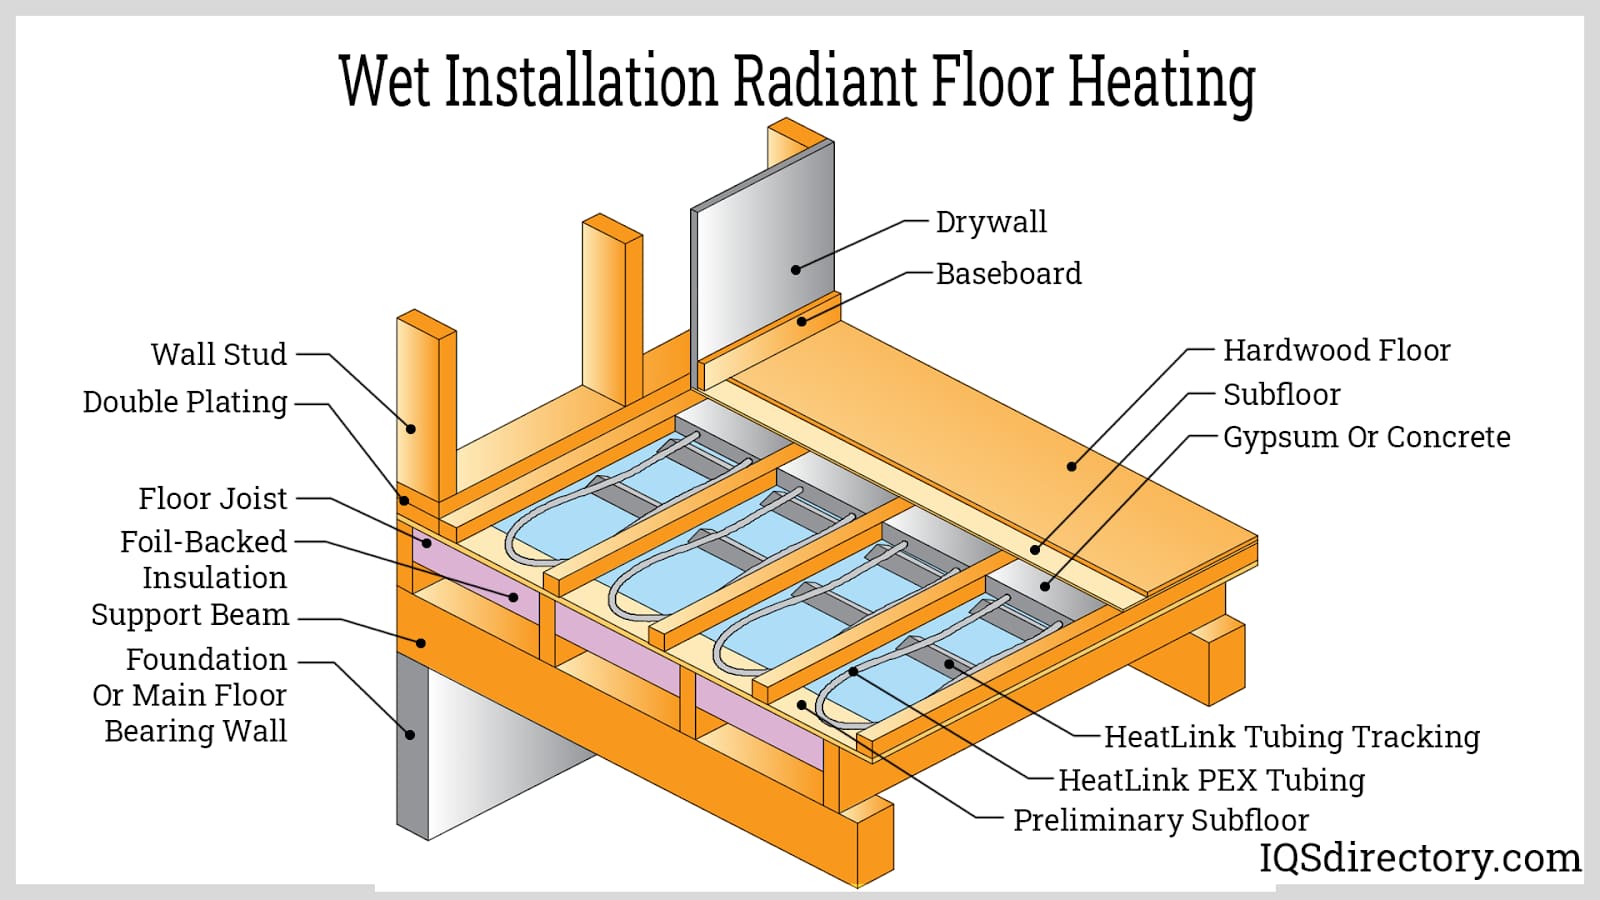 Wet Installation Radiant Floor Heating